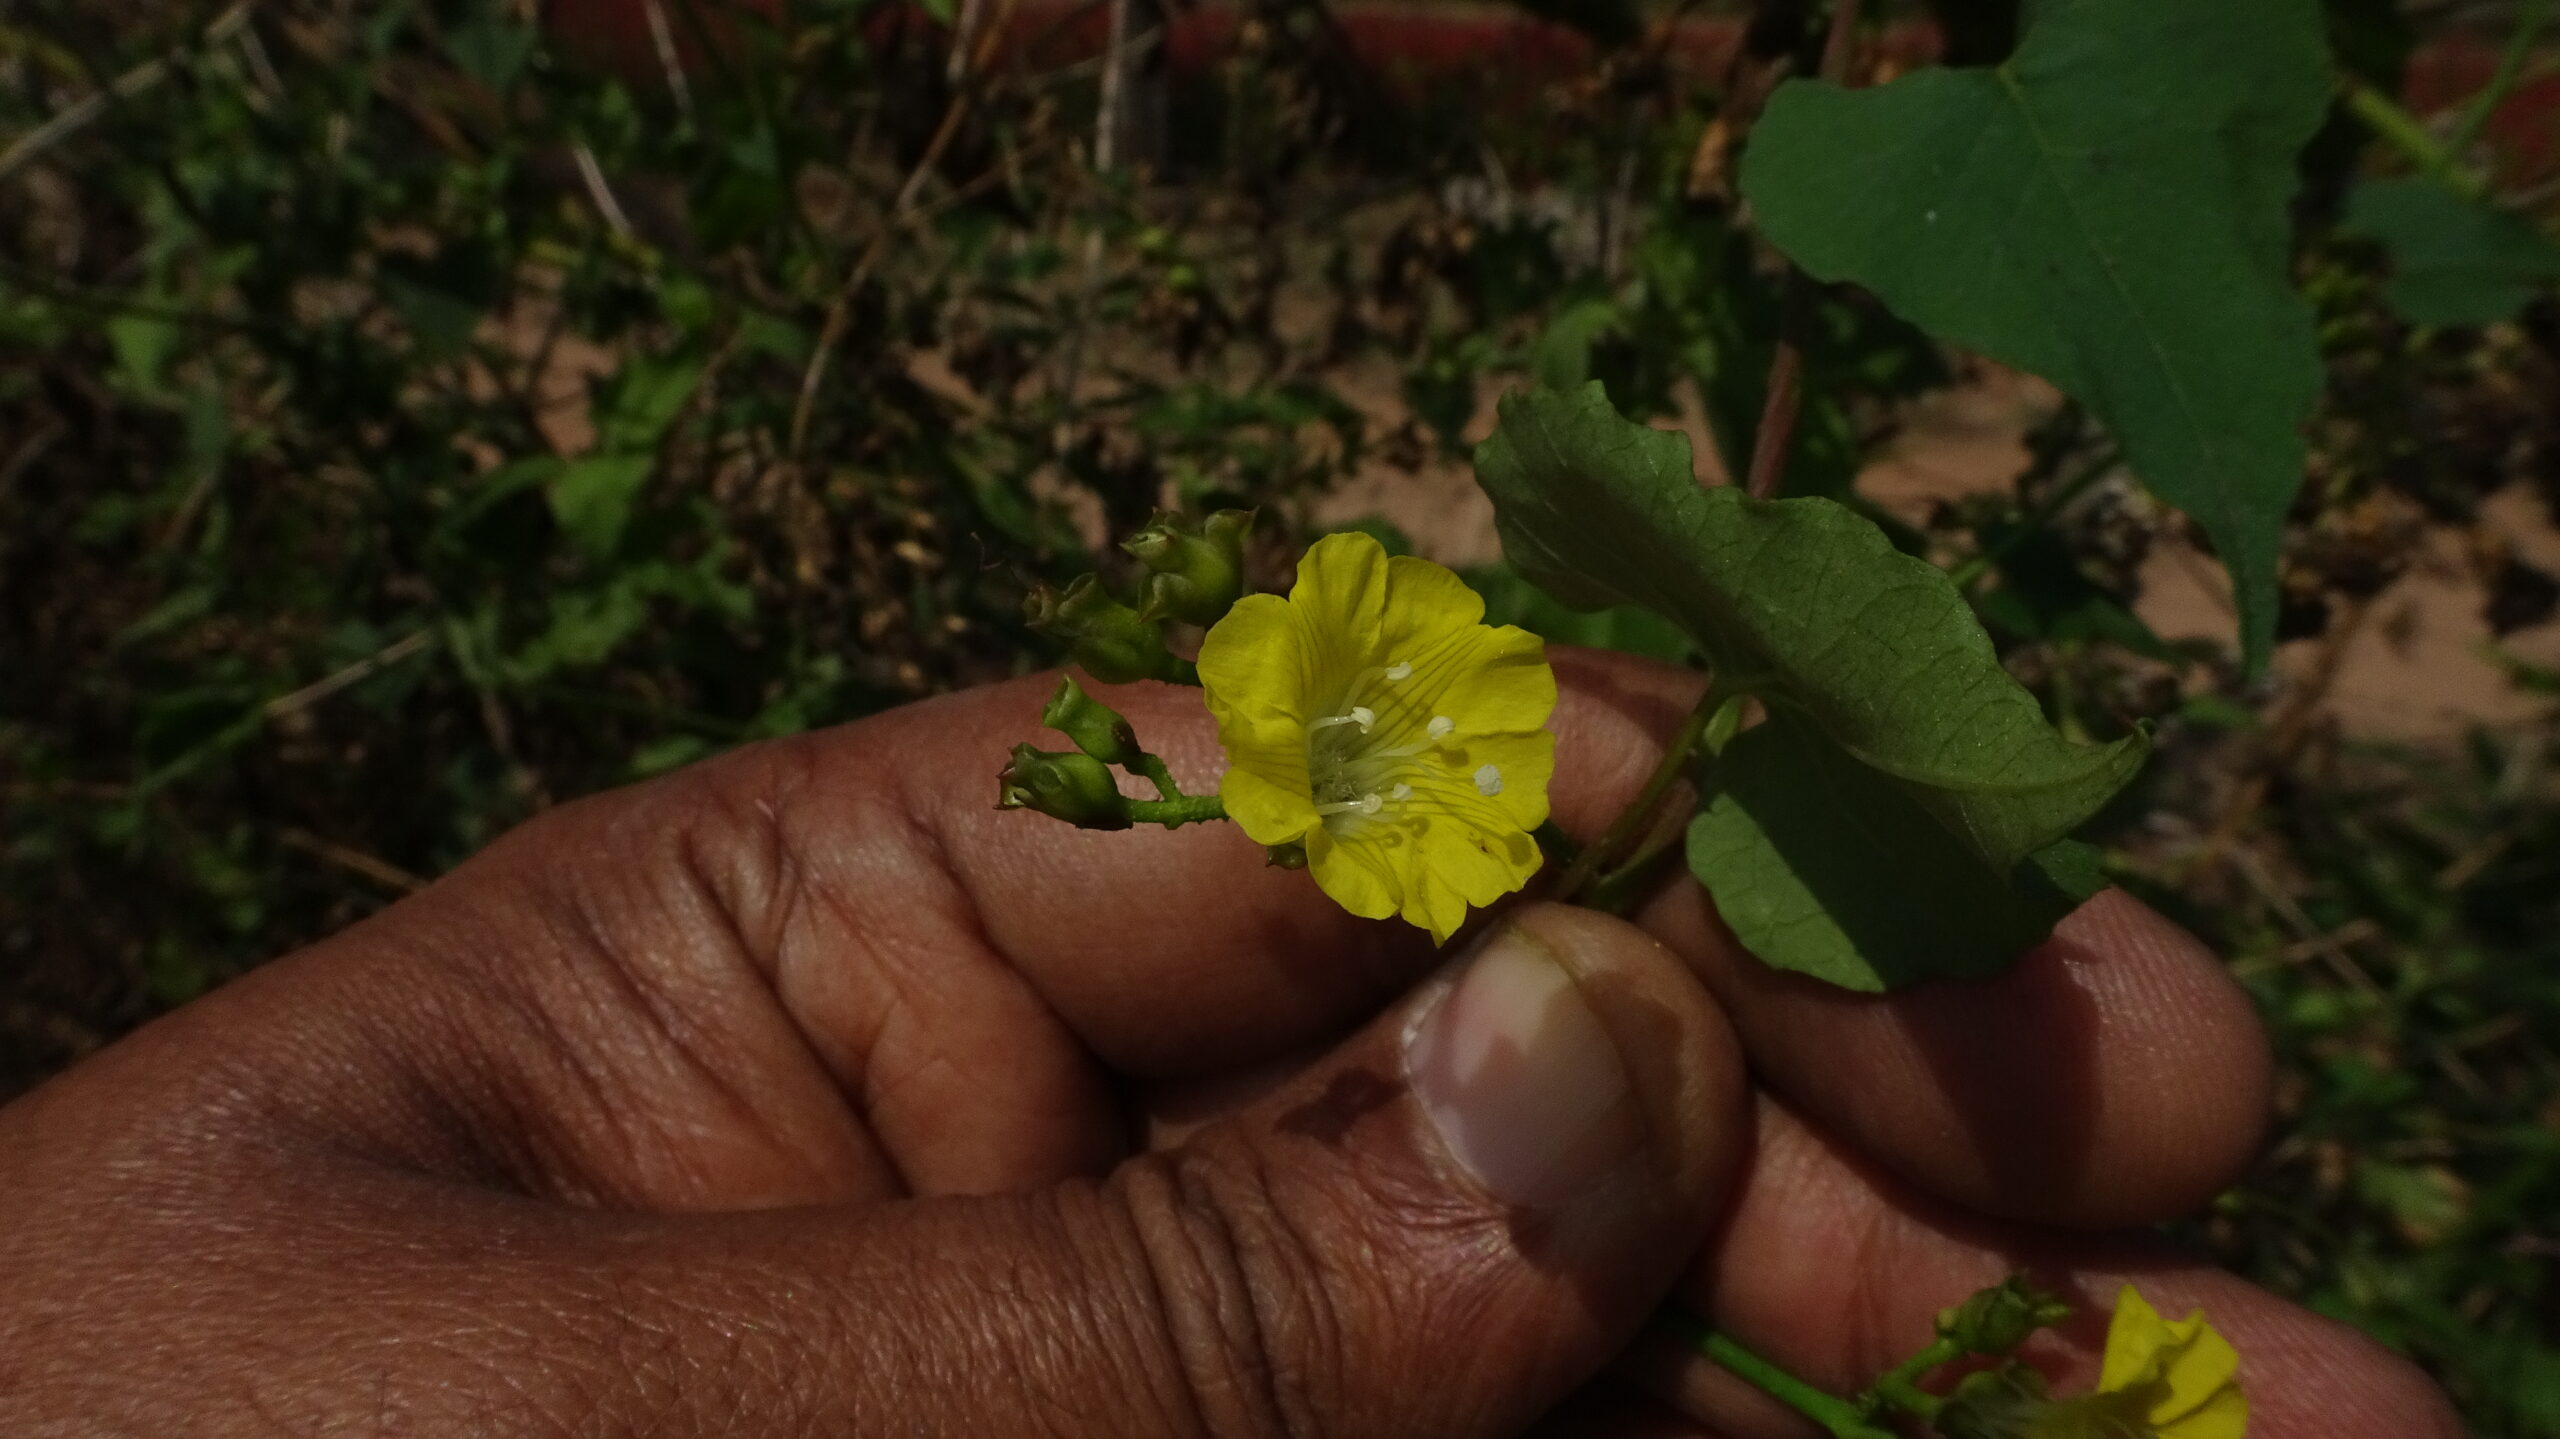 Merremia hederacea (Convolvulaceae- Morning Glory family)